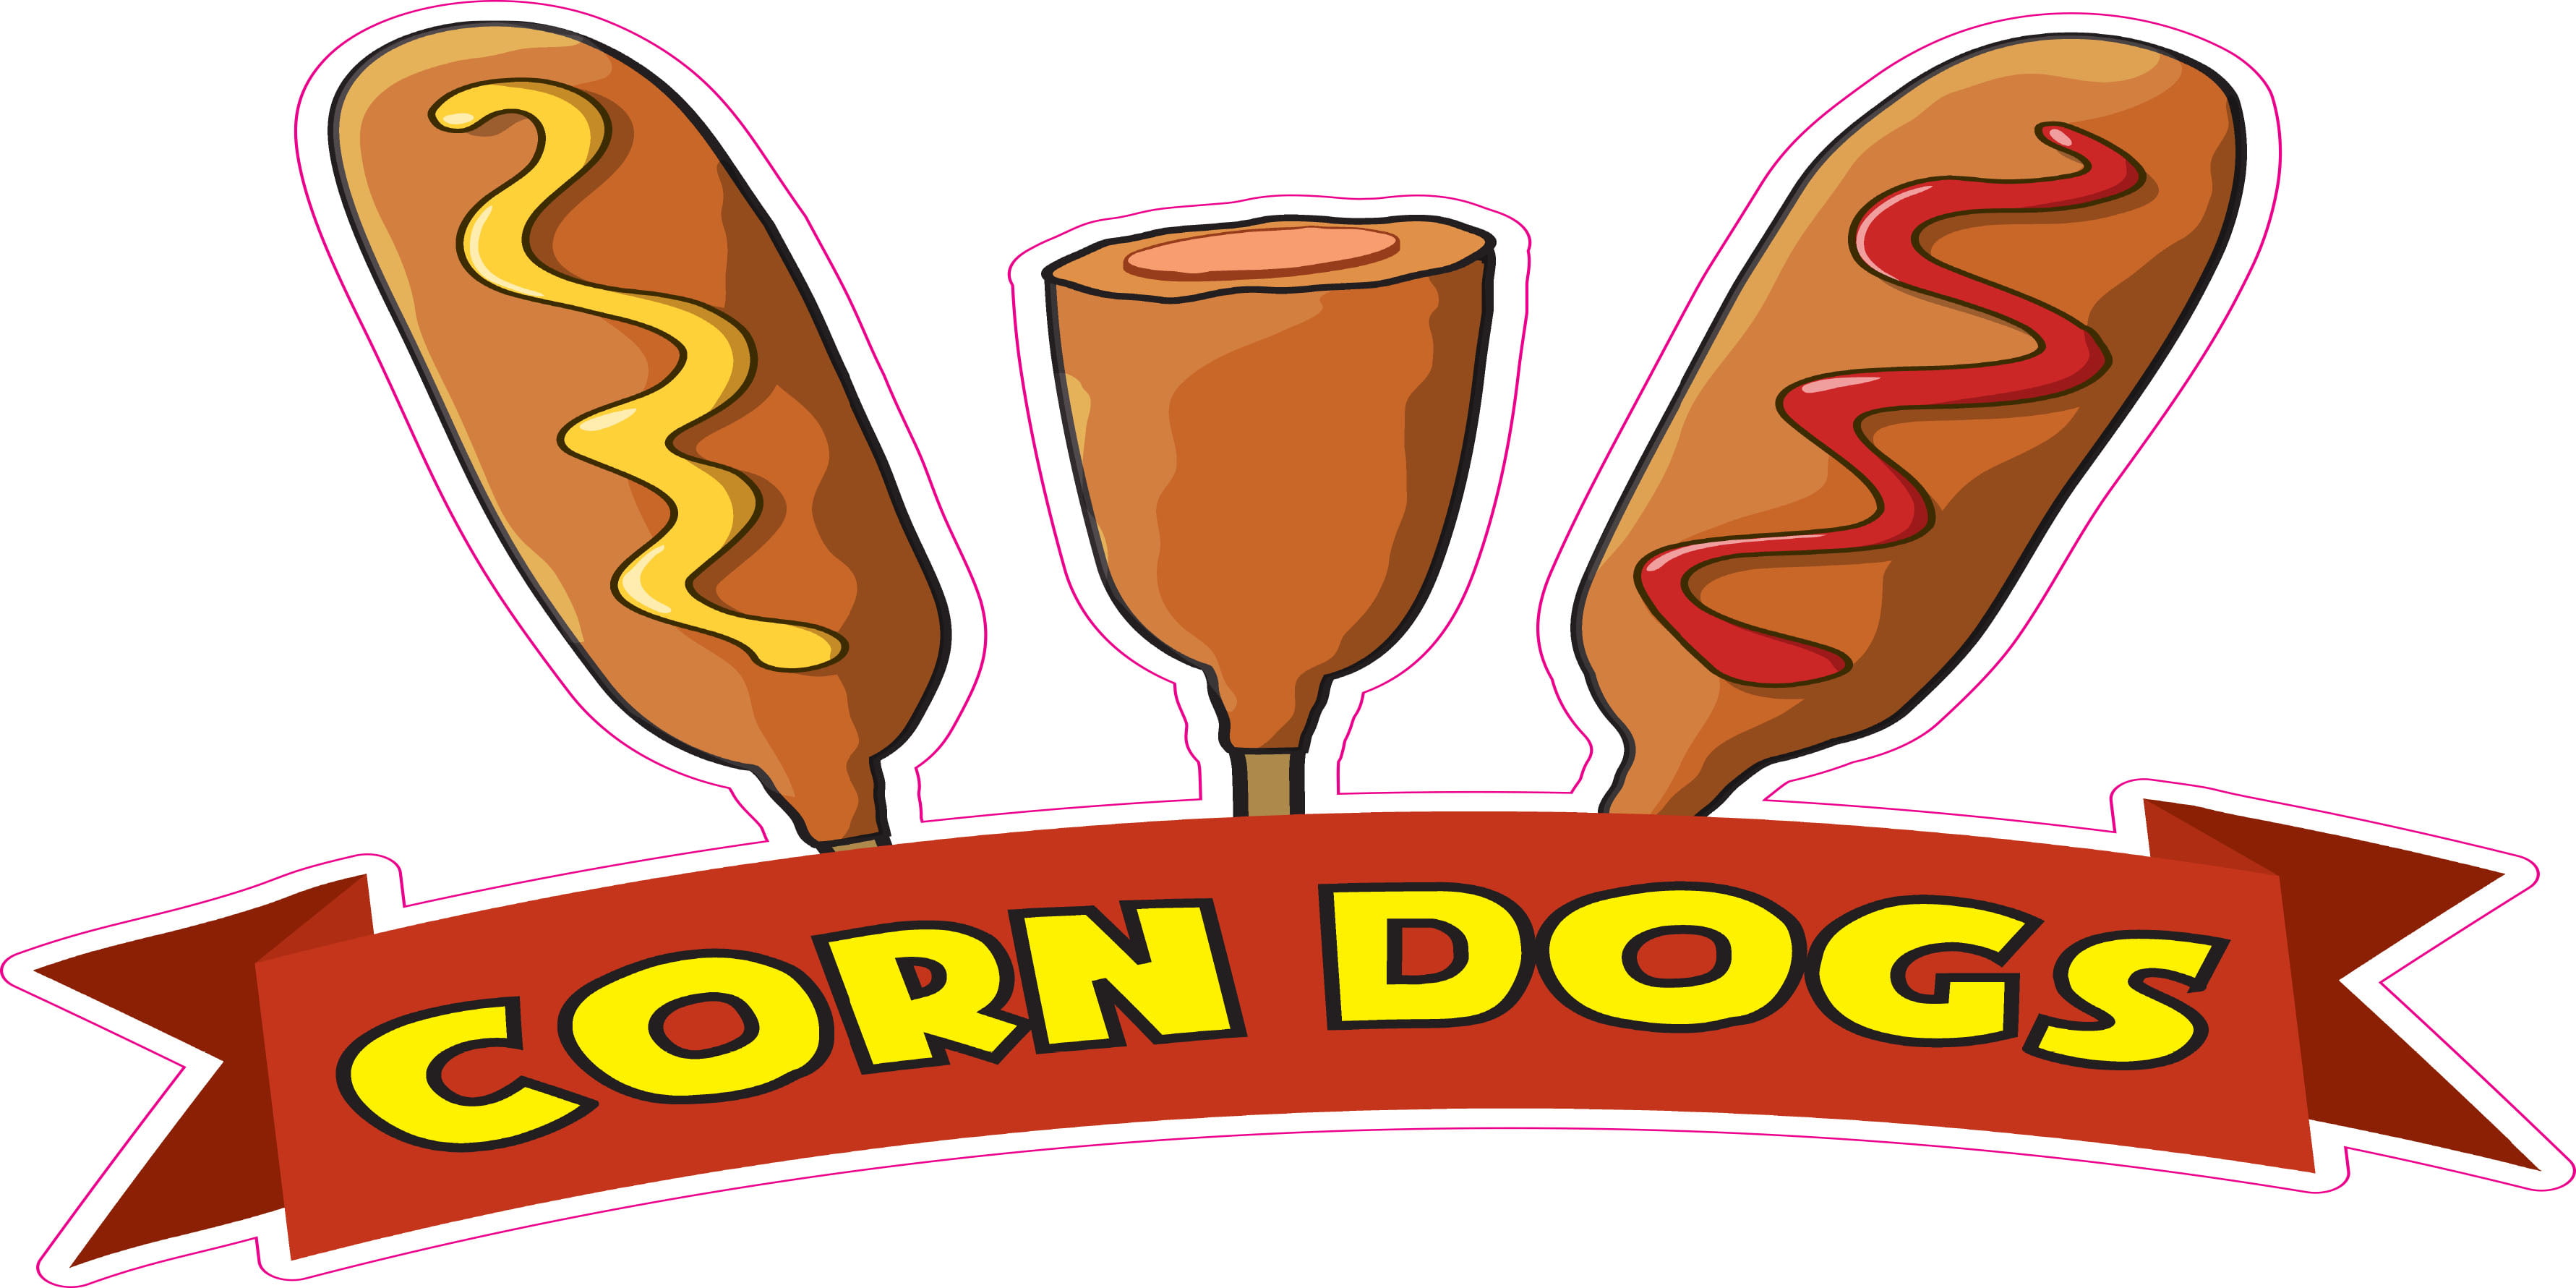 Corn Dogs Hot Dog Food Sales Concession Trailer Truck Vinyl Sticker Menu Decal 